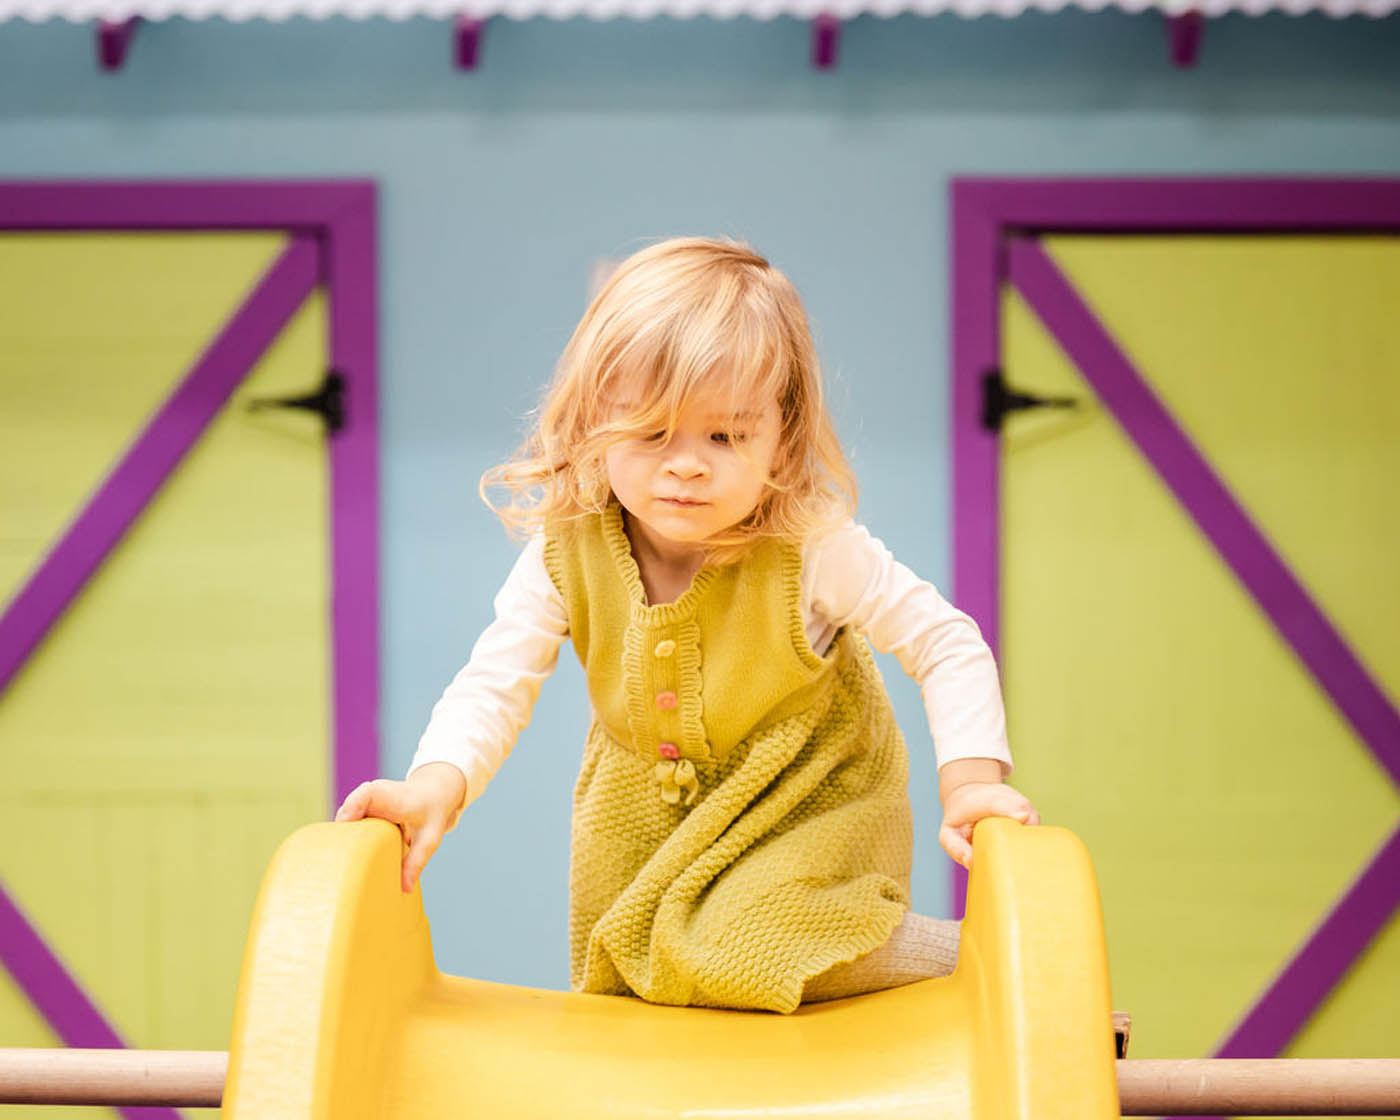 A girl climbing up a yellow slide enjoying open play in Charlotte, NC.